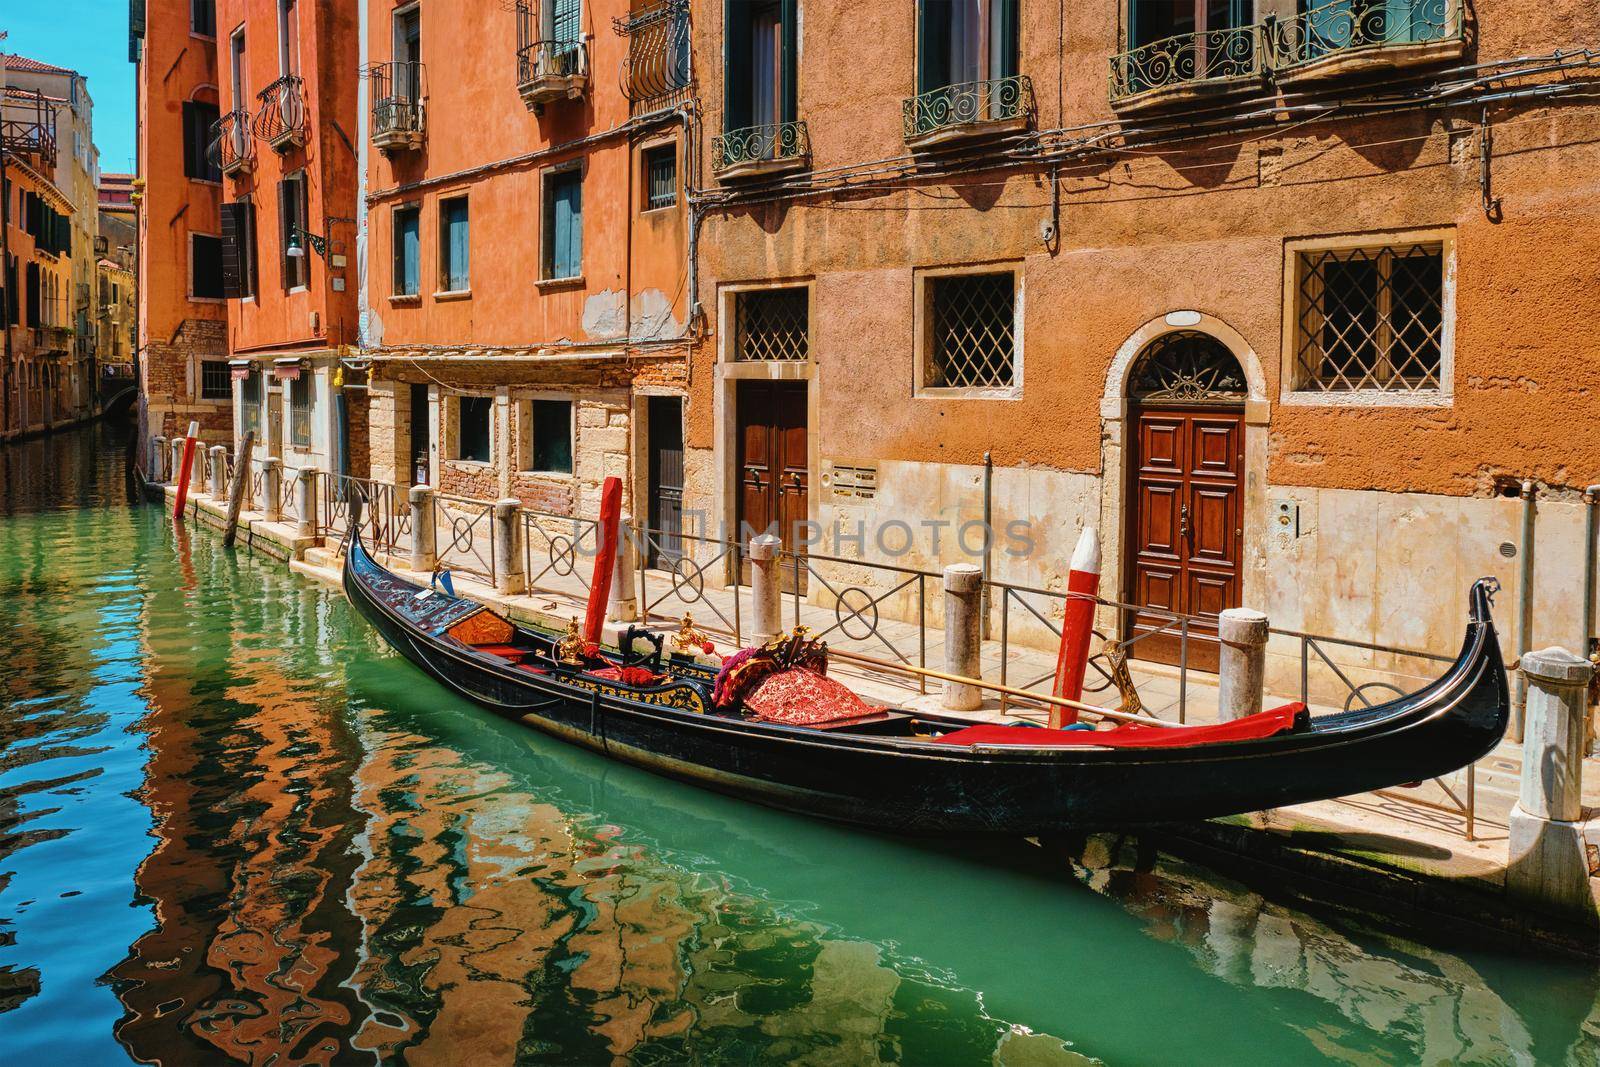 Narrow canal with gondola in Venice, Italy by dimol